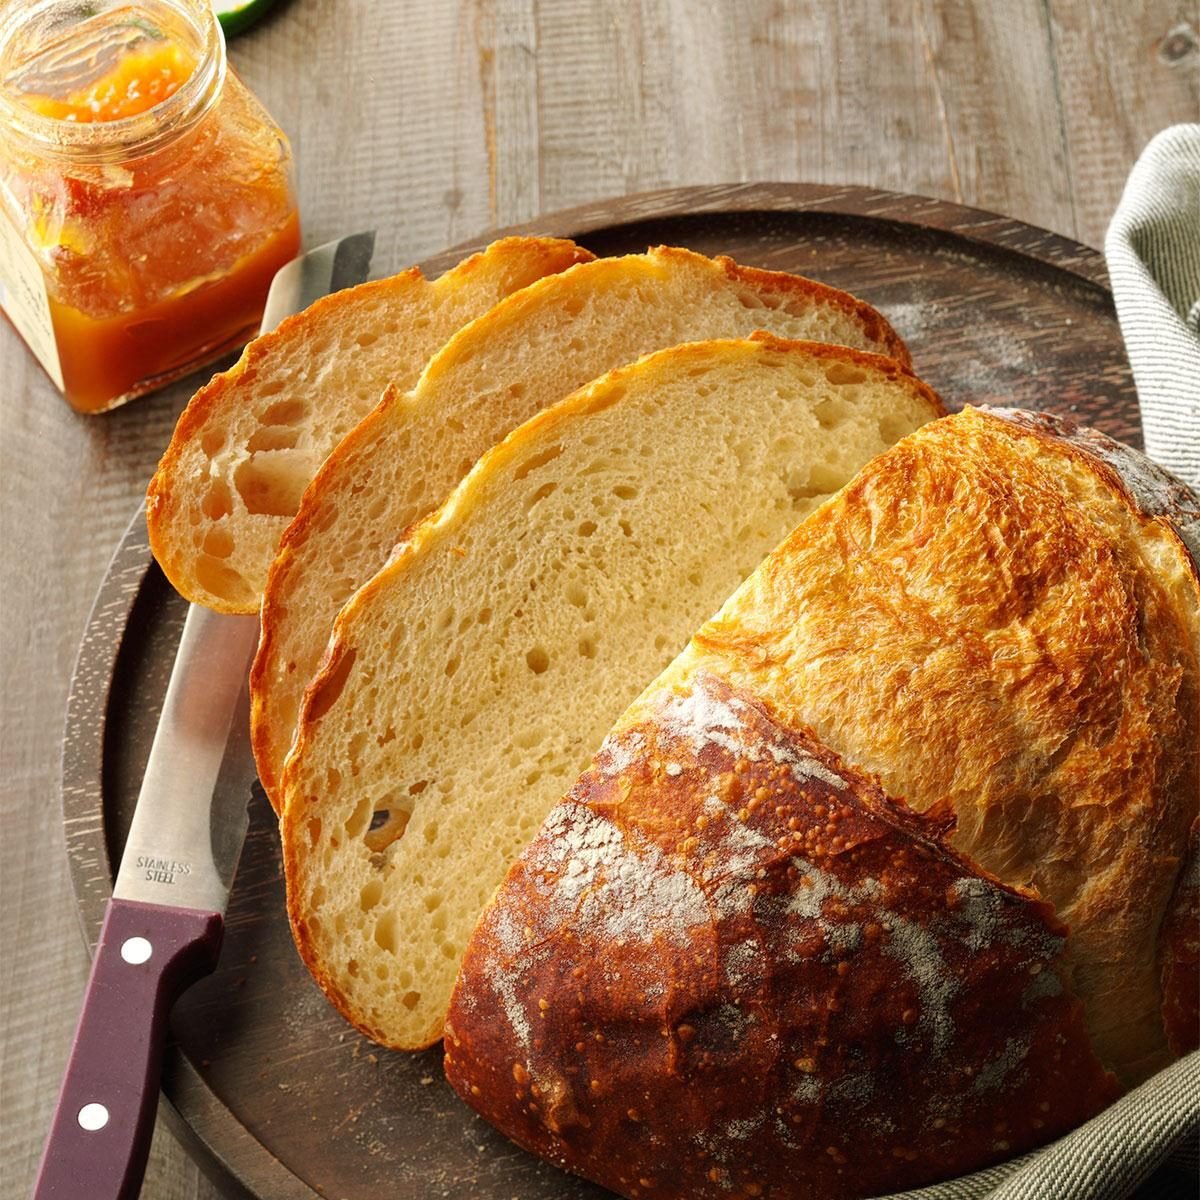 Discover homemade bread